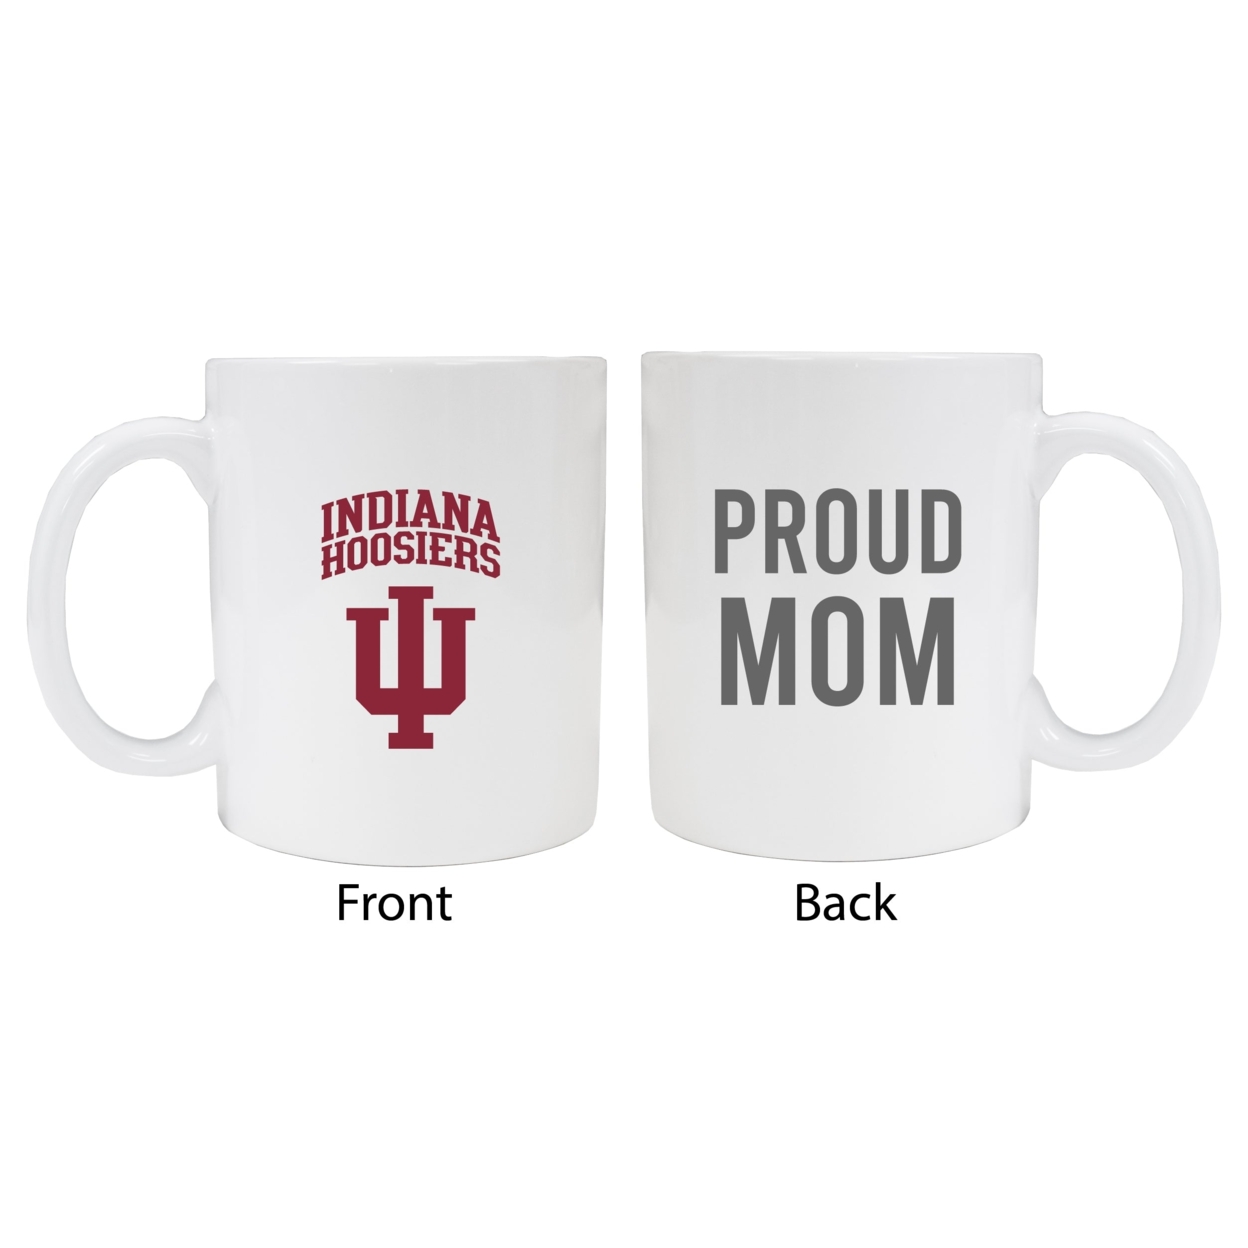 Indiana Hoosiers Proud Mom Ceramic Coffee Mug - White